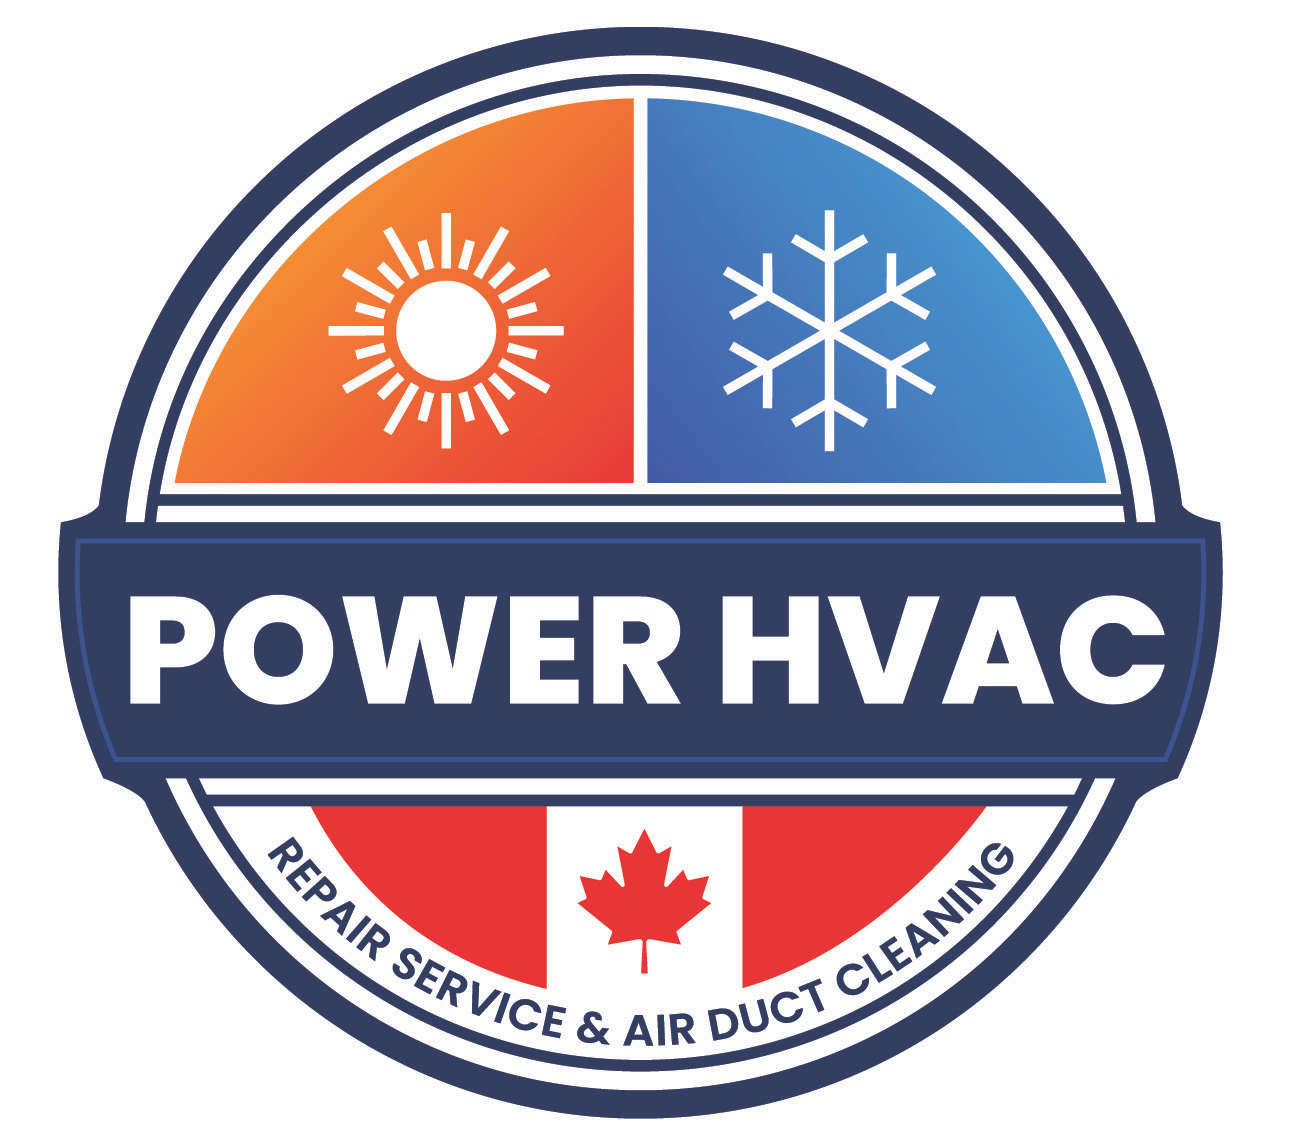 Power HVAC Services Logo